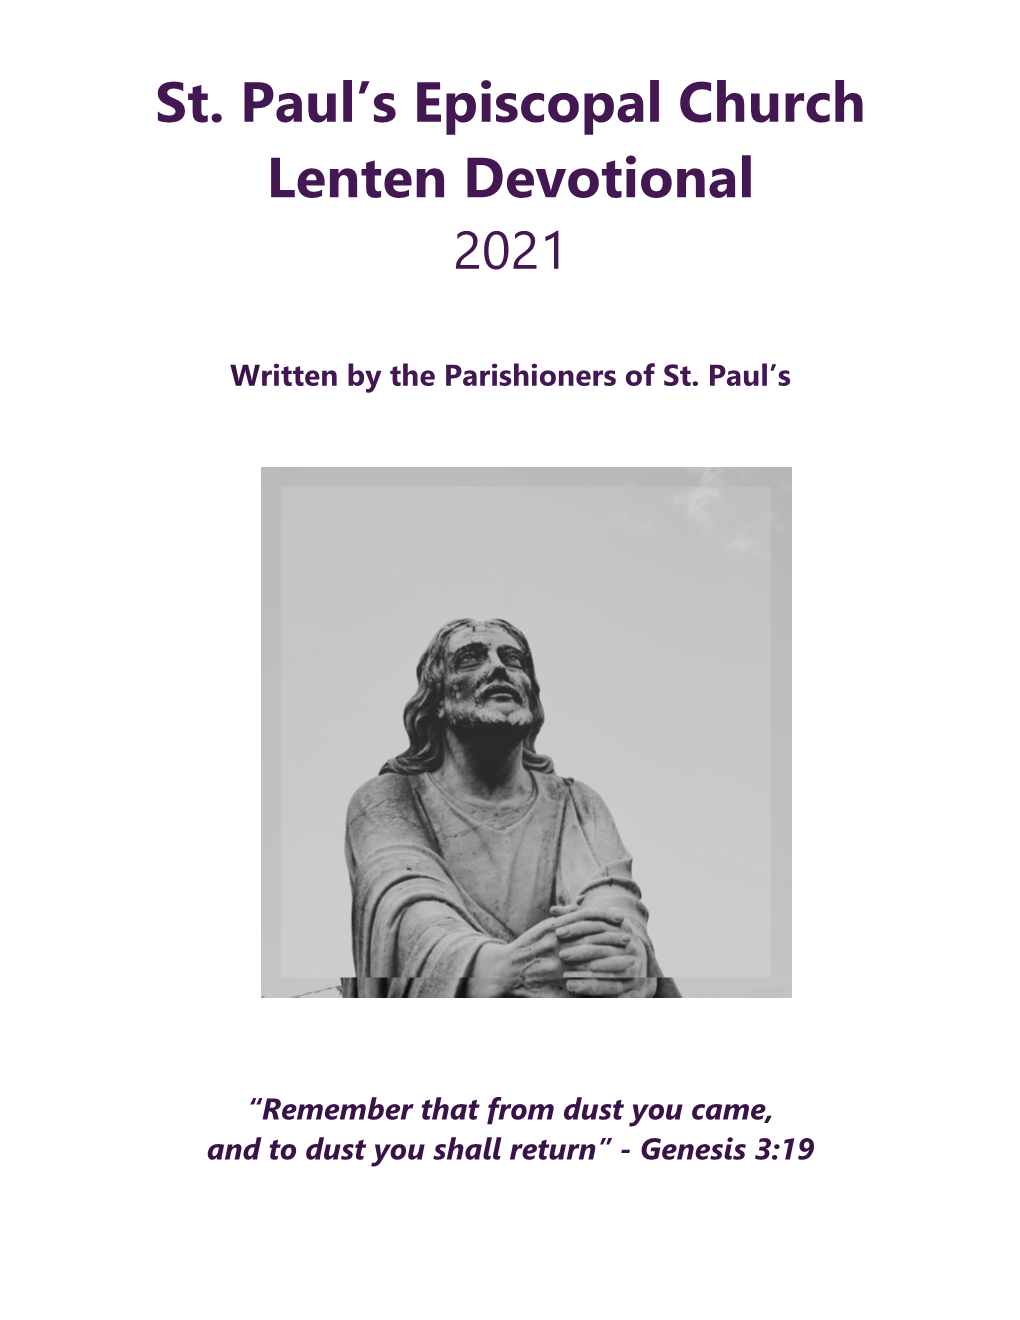 St. Paul's Episcopal Church Lenten Devotional